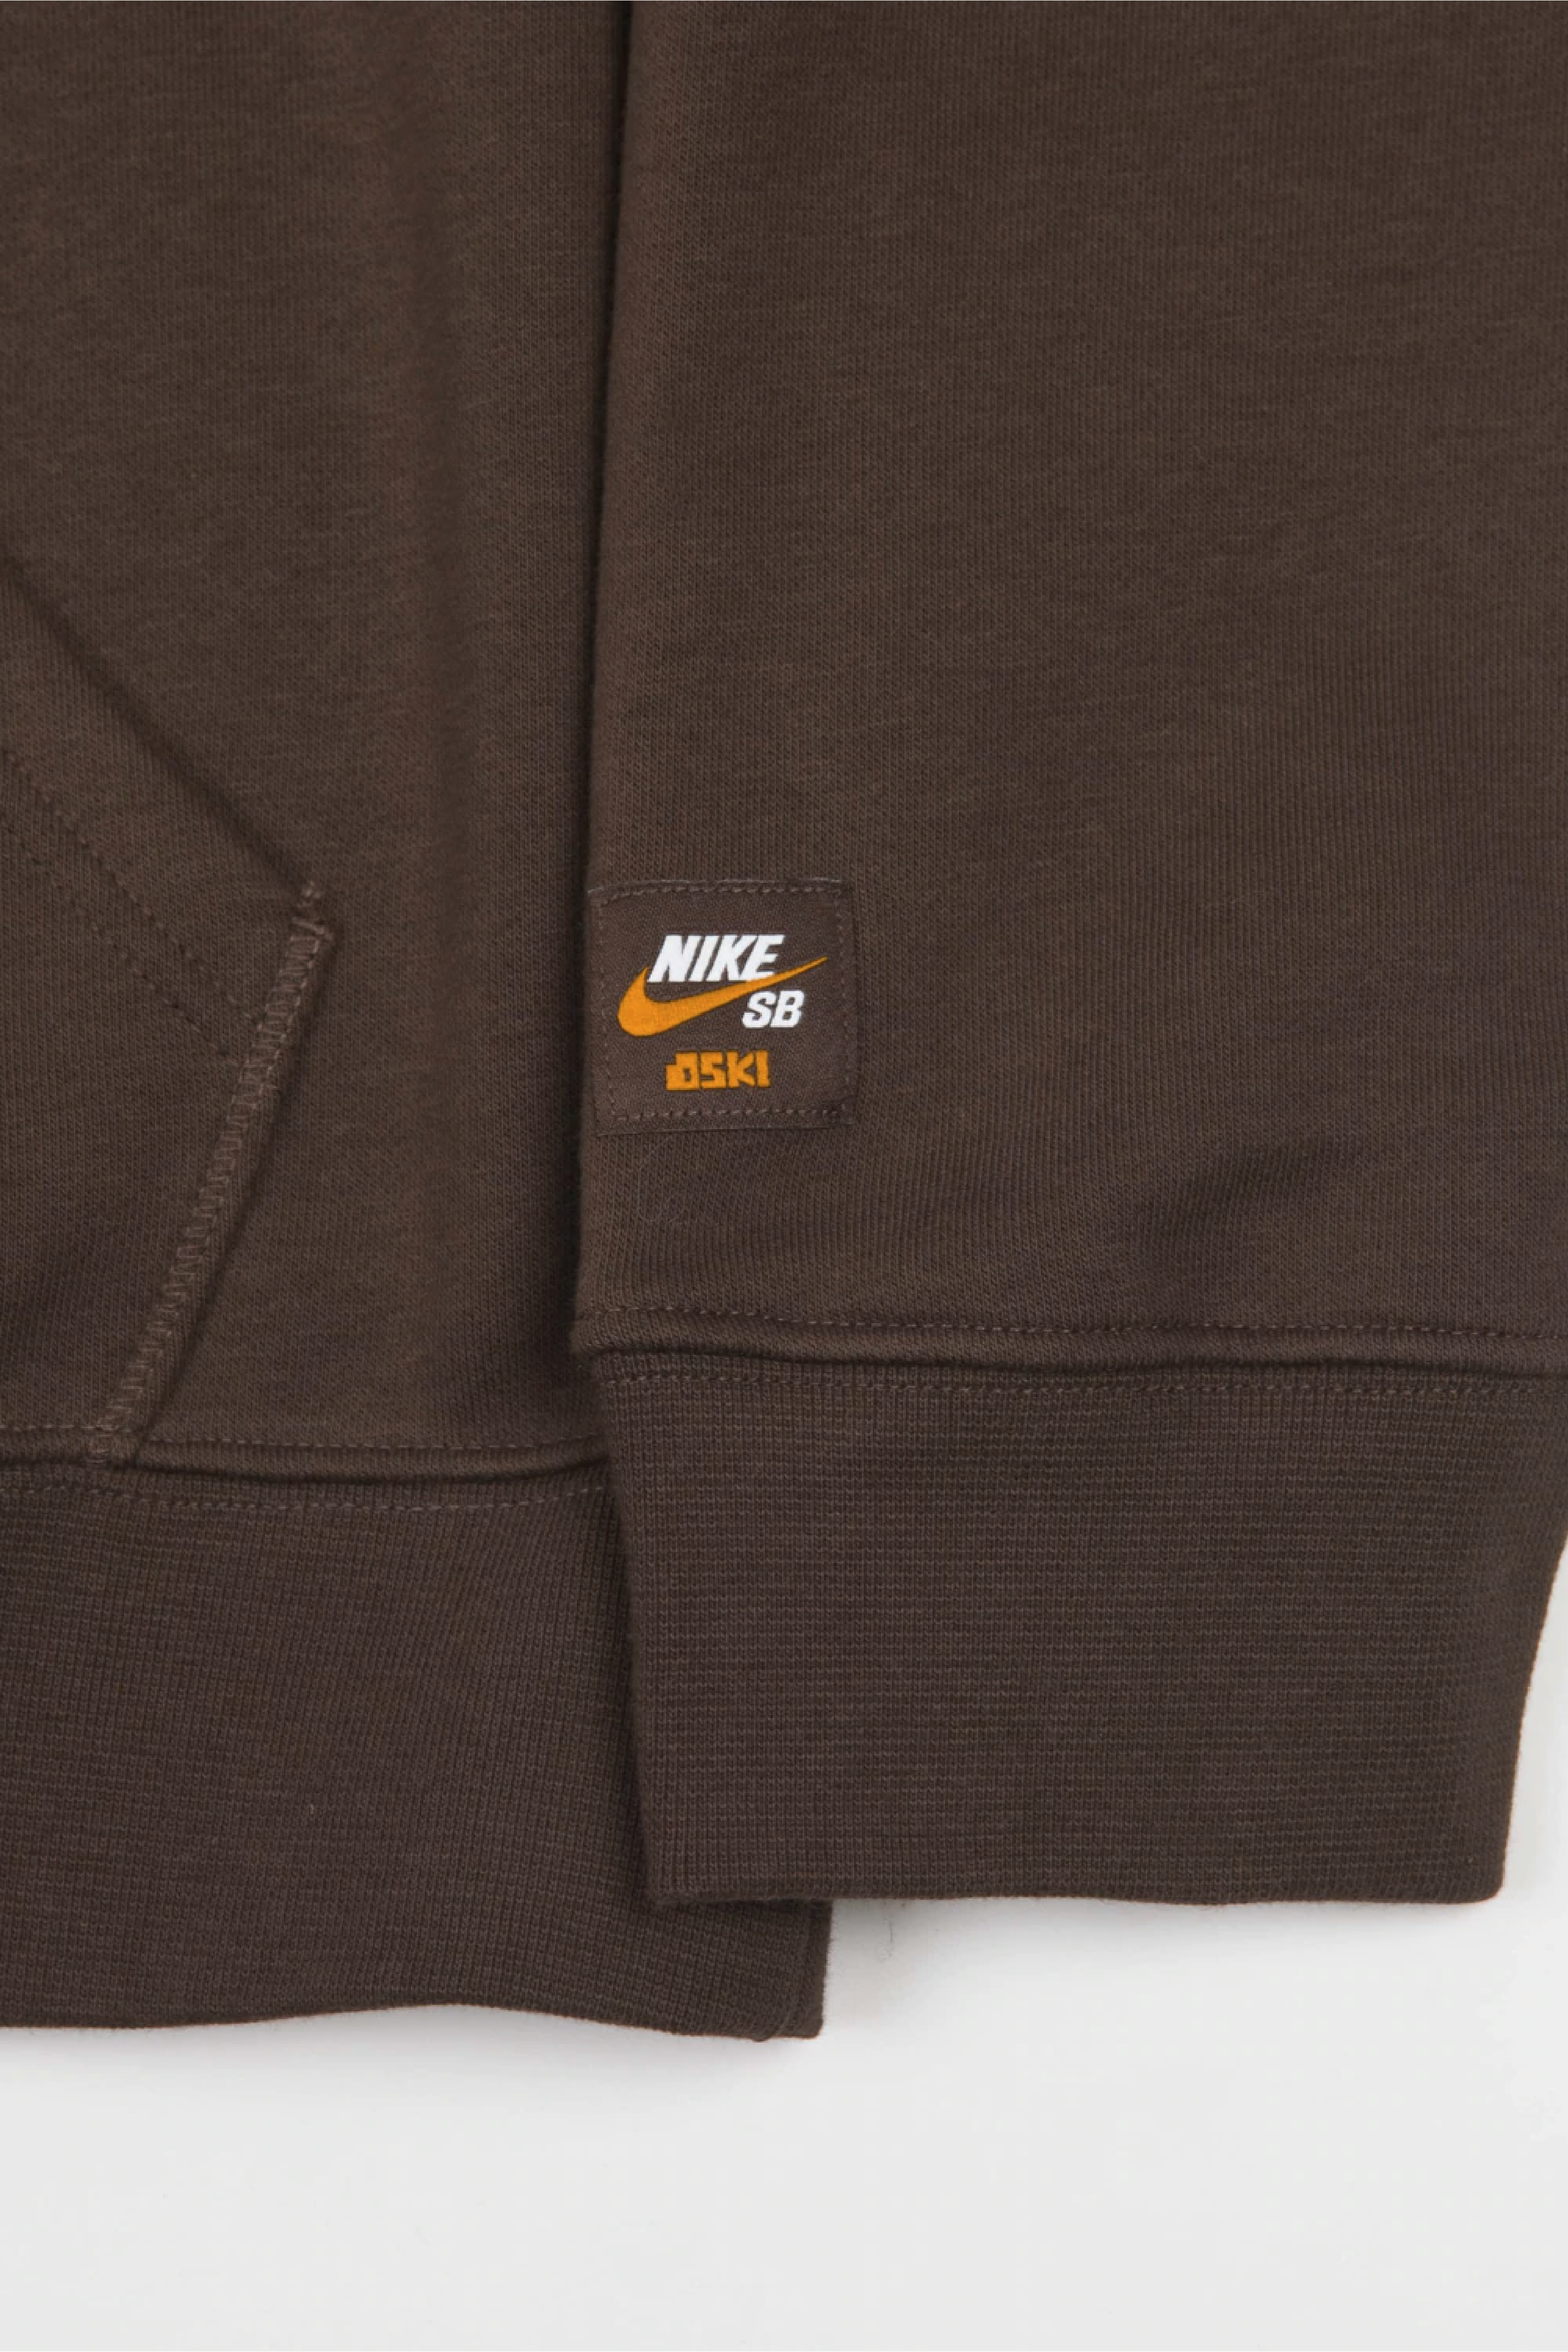 Selectshop FRAME - NIKE SB Nike SB Oski Hoodie Sweats-knits Dubai